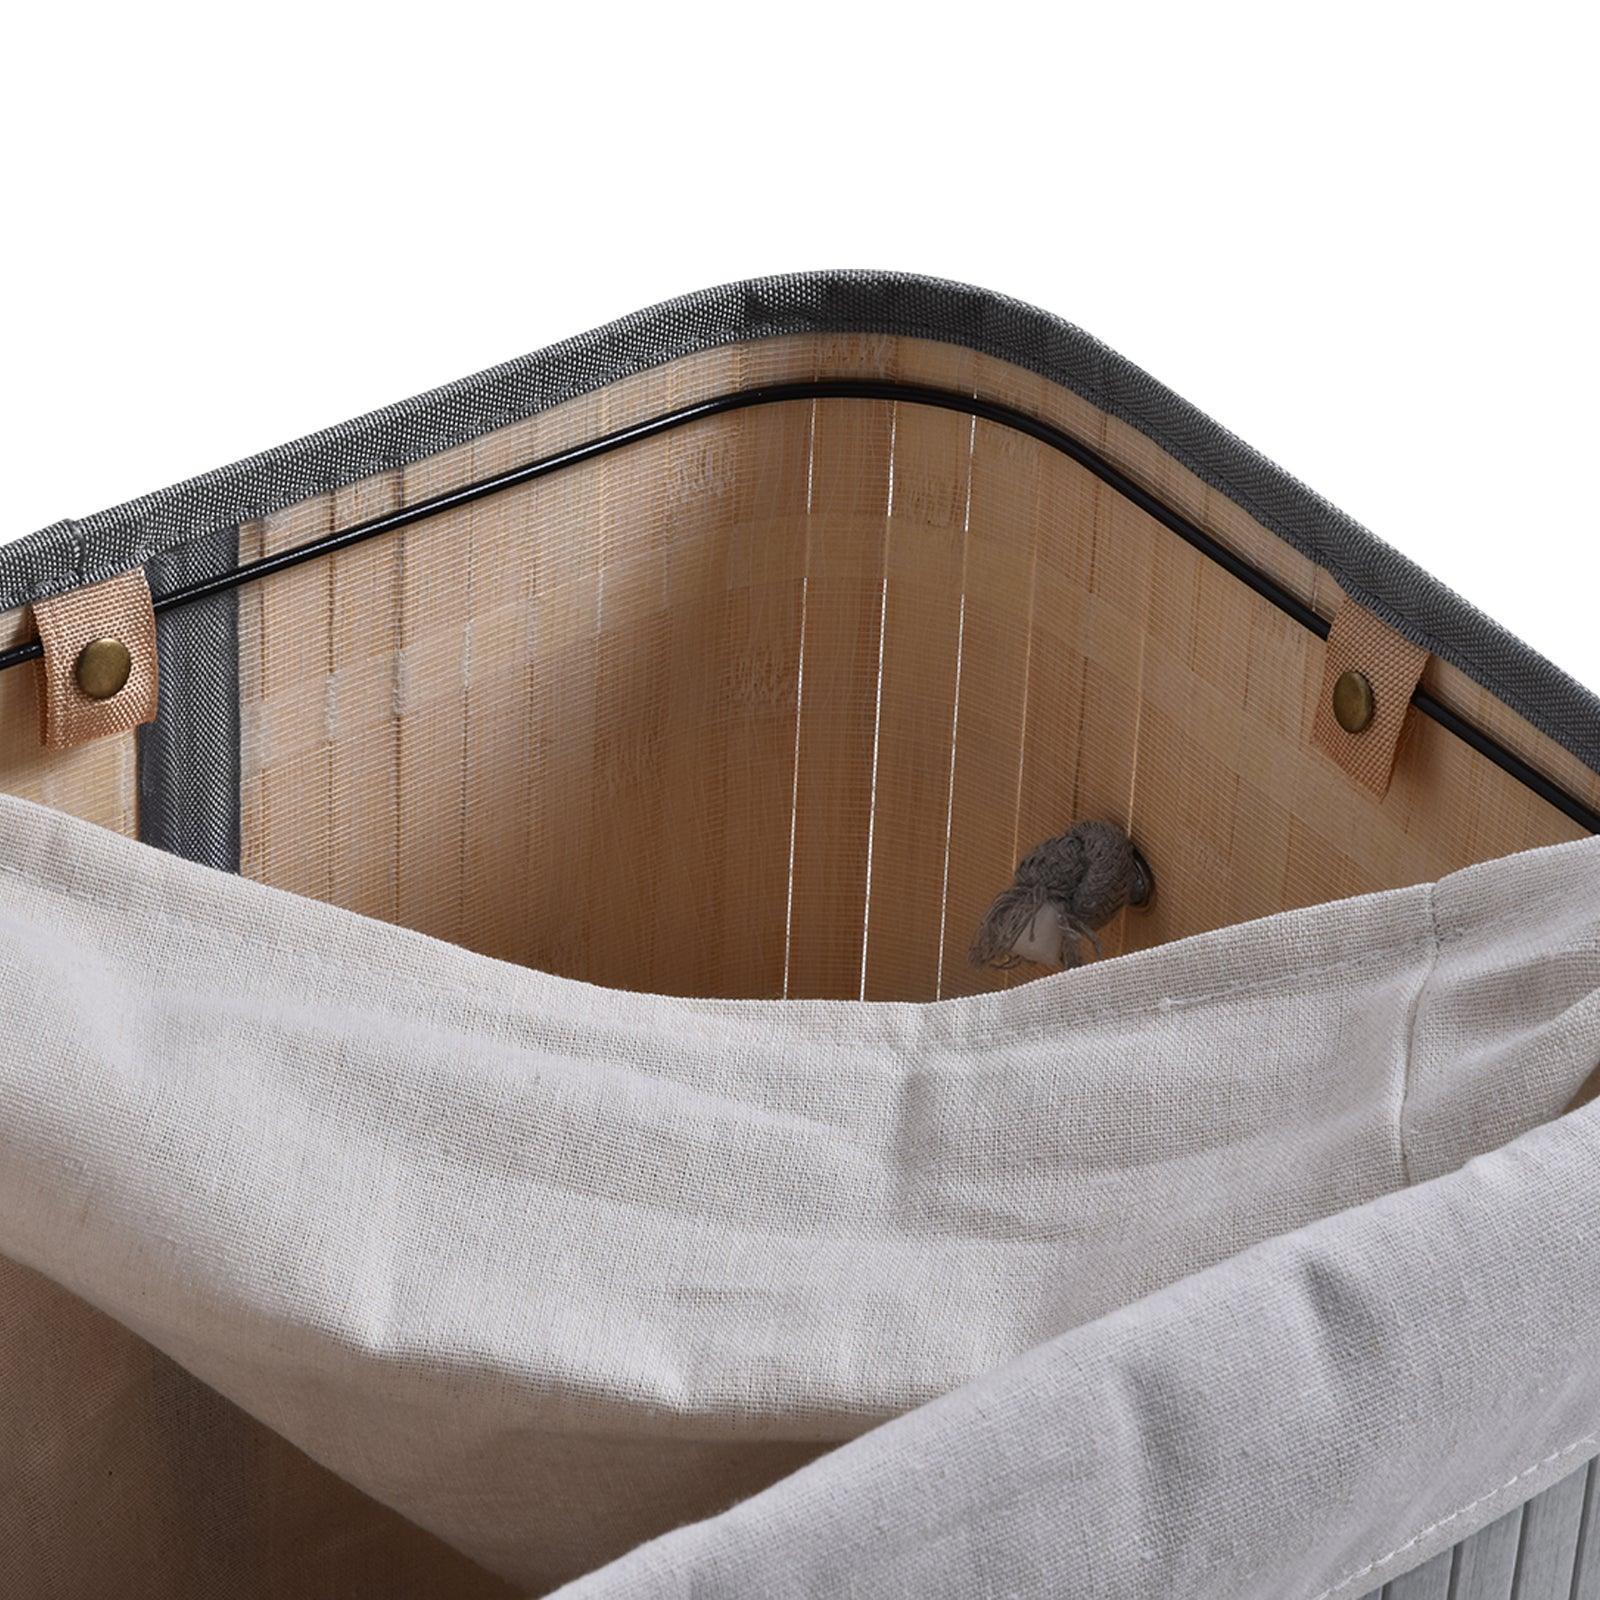 HOMCOM Wooden Laundry Basket - Foldable, 70L - ALL4U RETAILER LTD